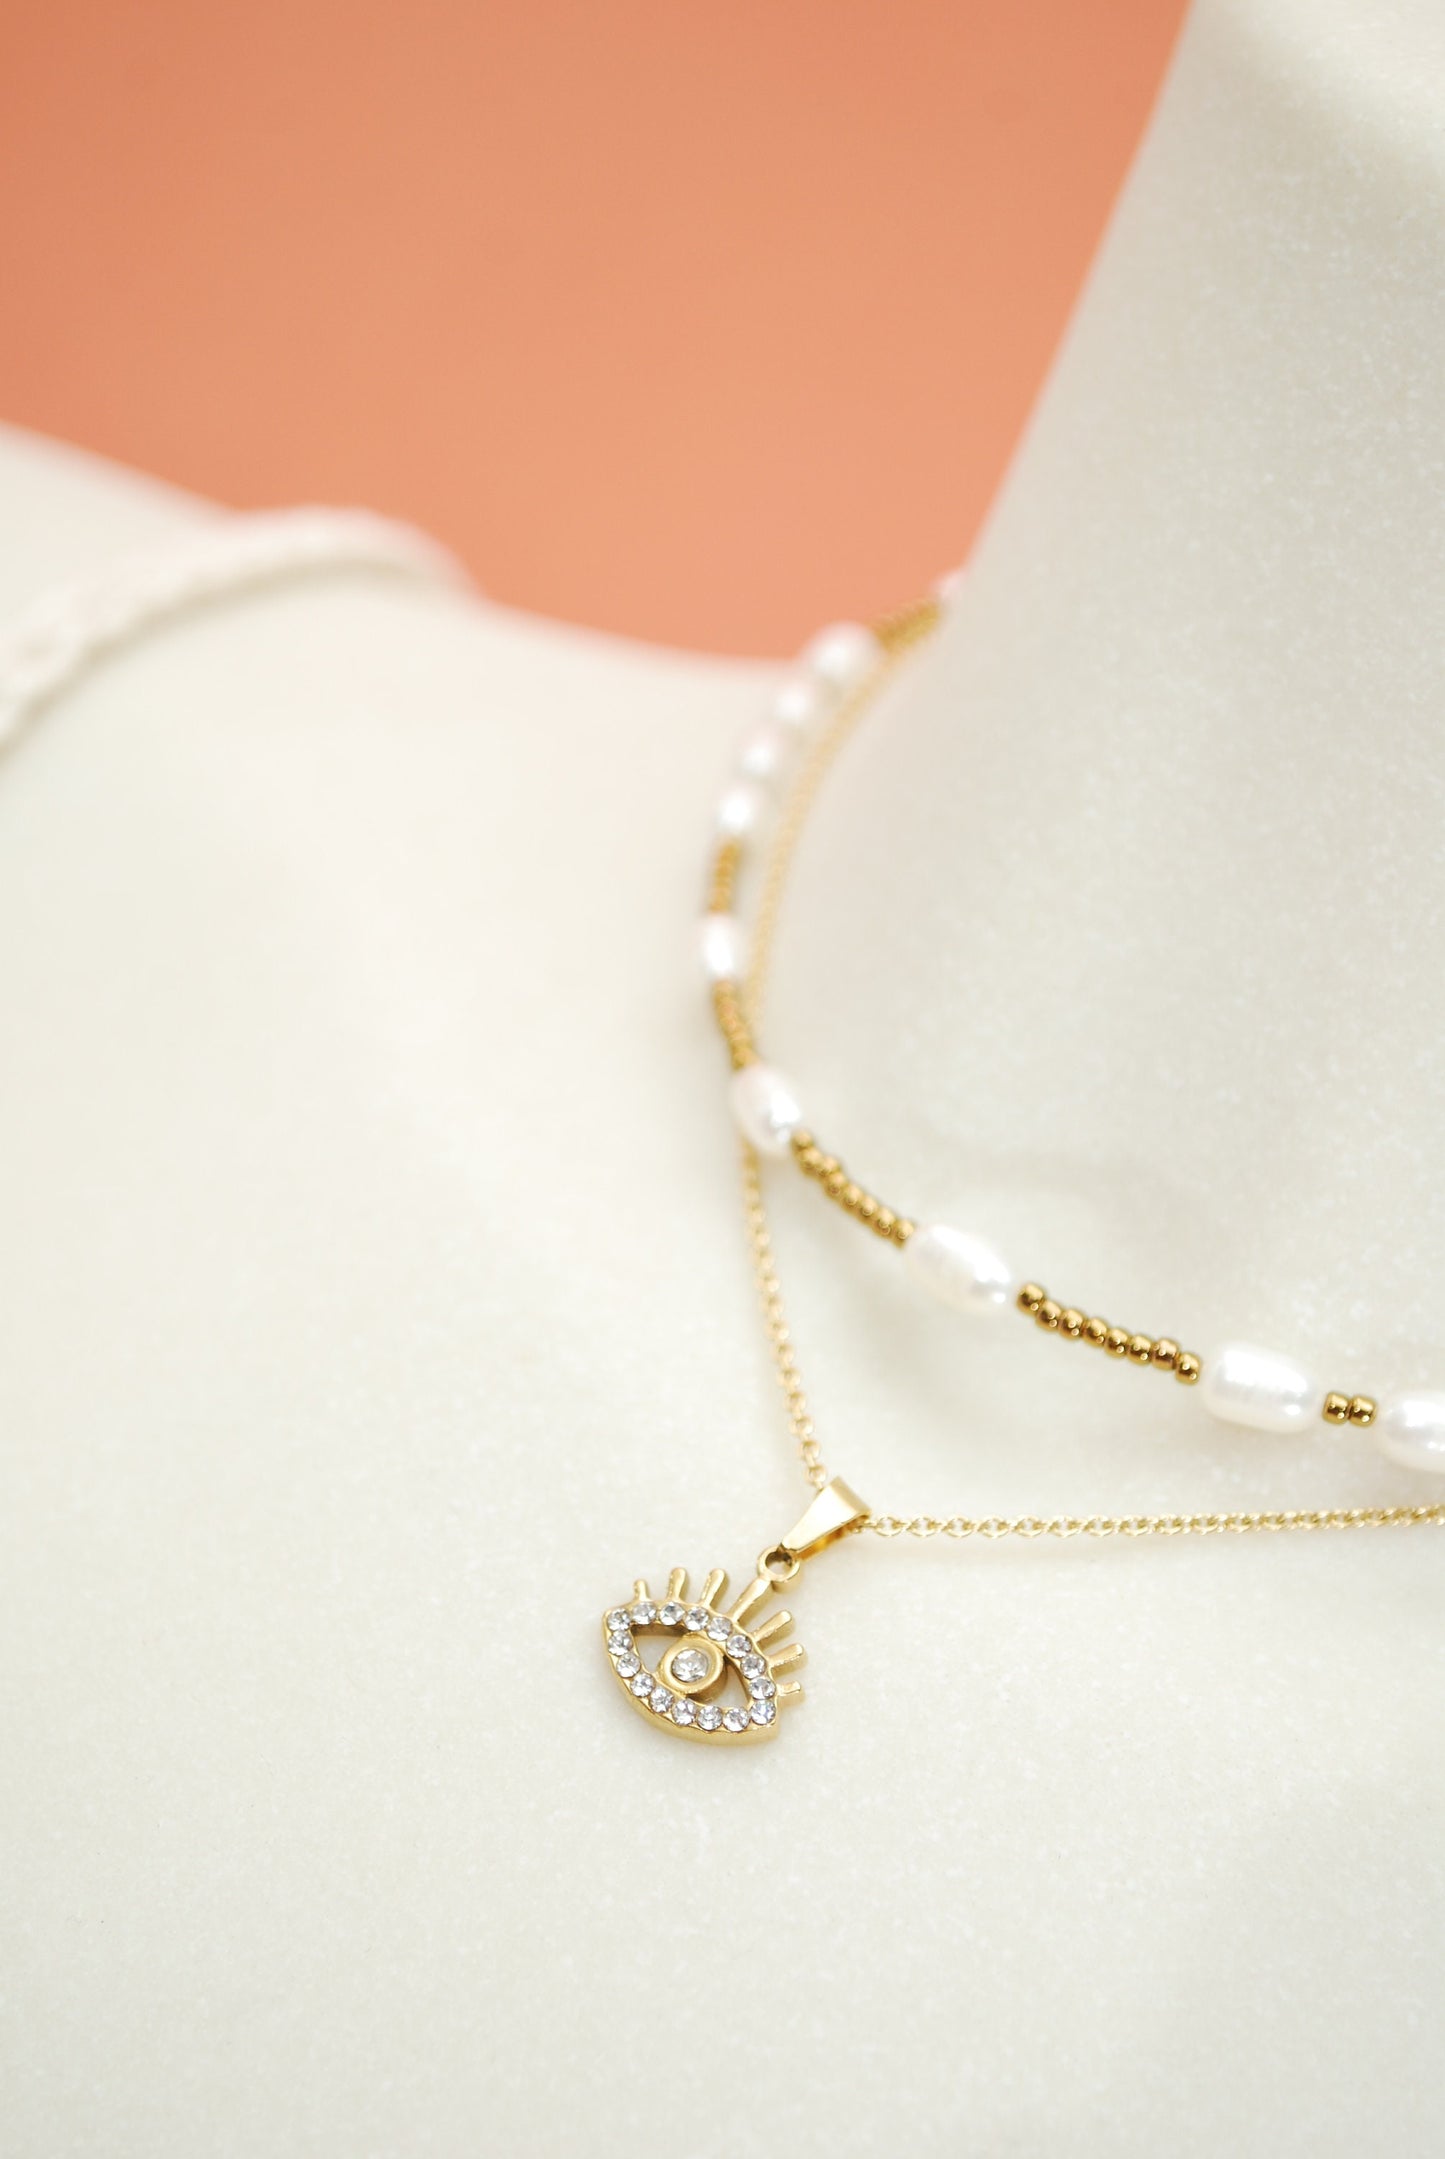 Set of 2 necklace, Freshwater gold choker, stainless steel chain, eye pendant, y2k style, trendy set, Estibela